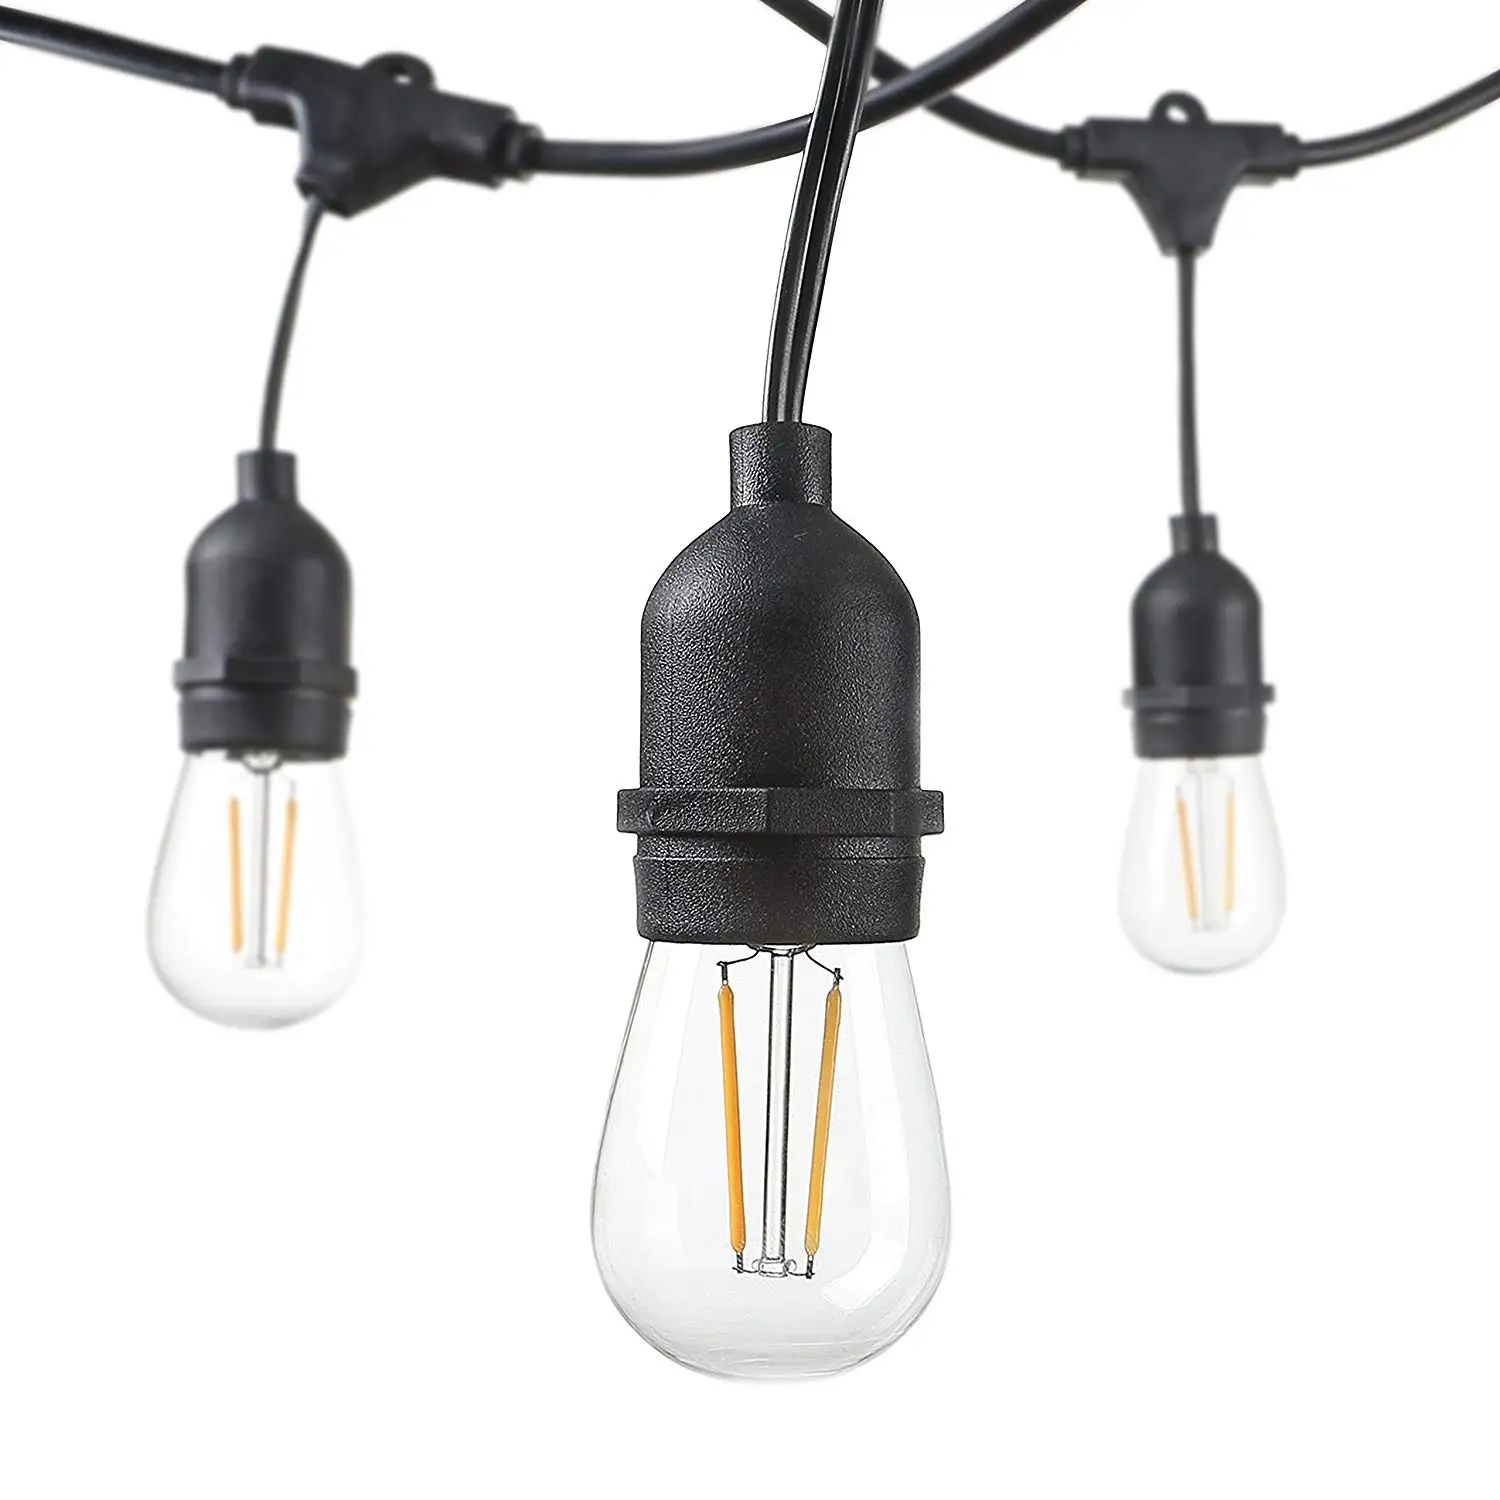 Wholesale hanging outdoor lights S14 2W Edison Filament Bulb 240v Led String Lights waterproof 65